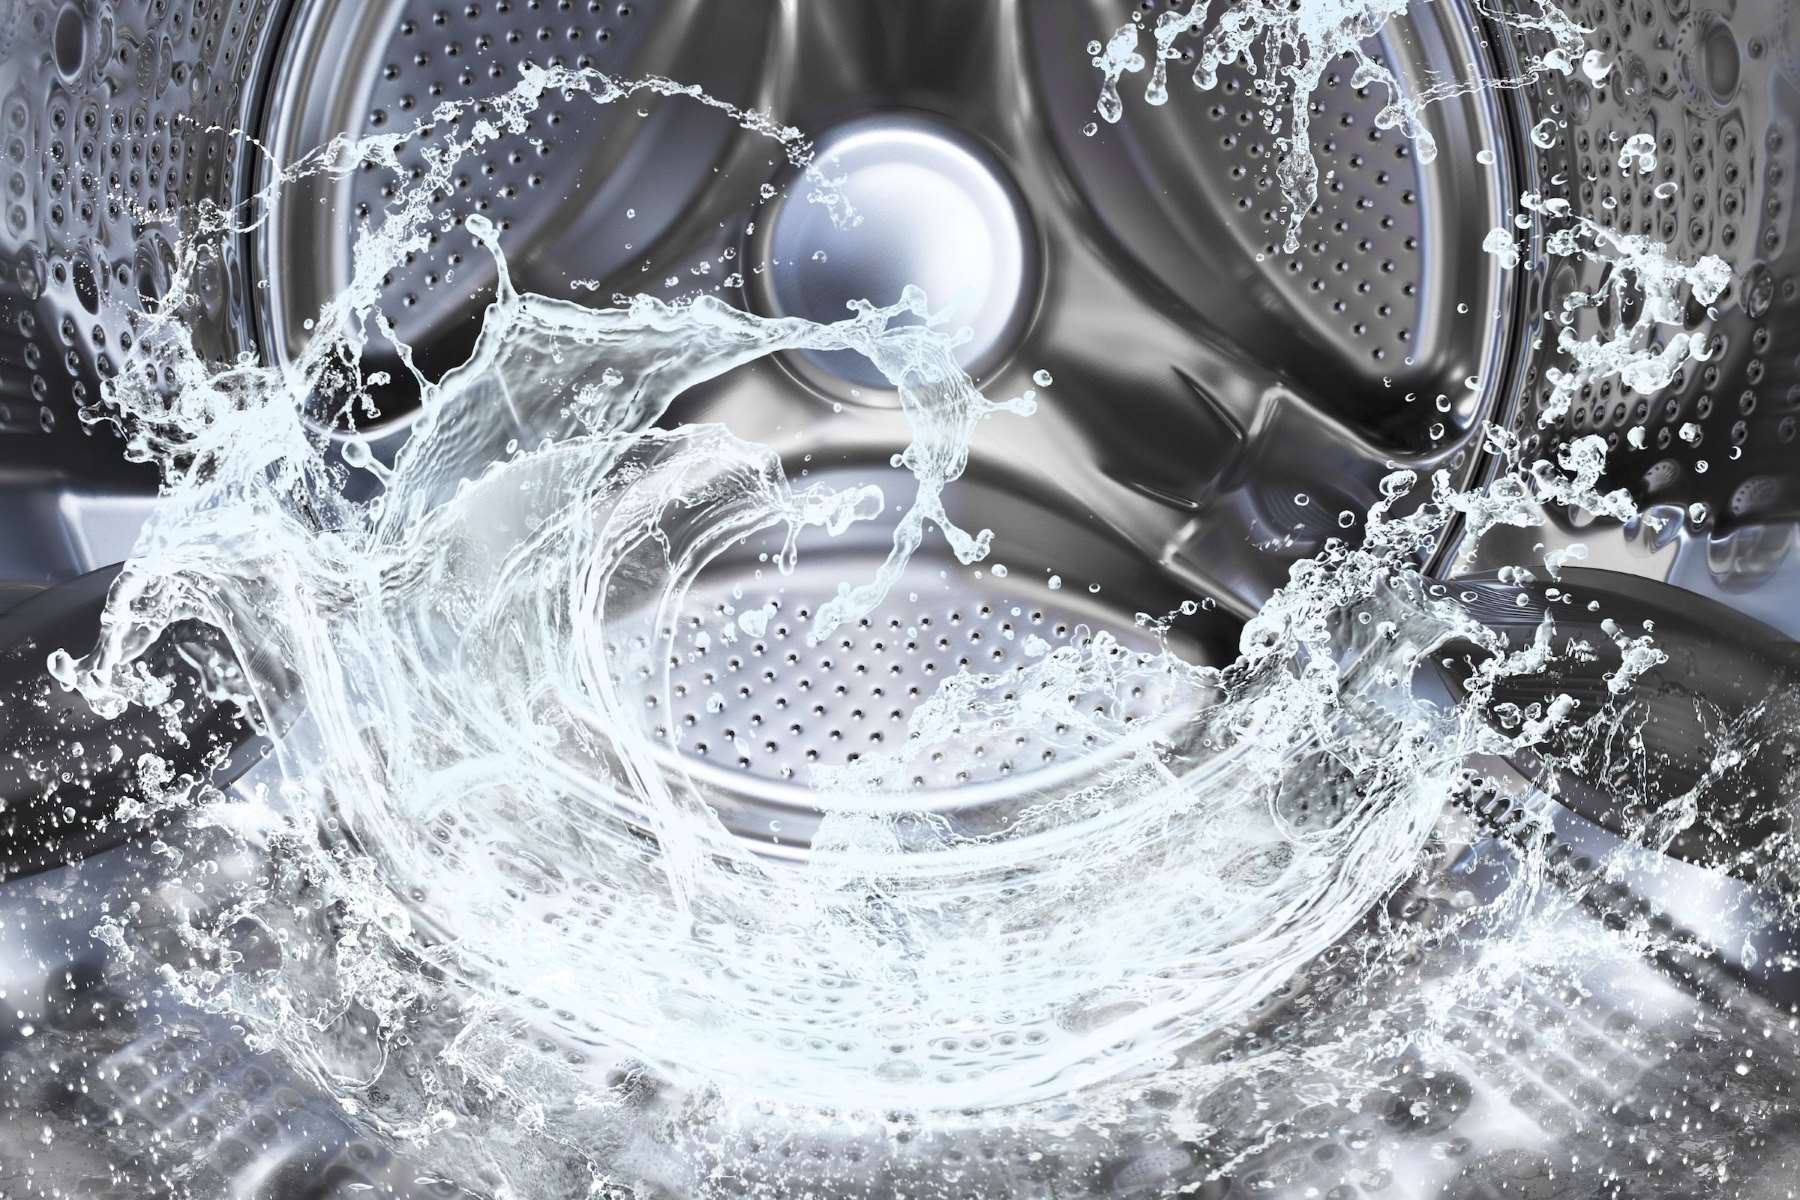 Washing Machine Making Grinding Noise When Spinning